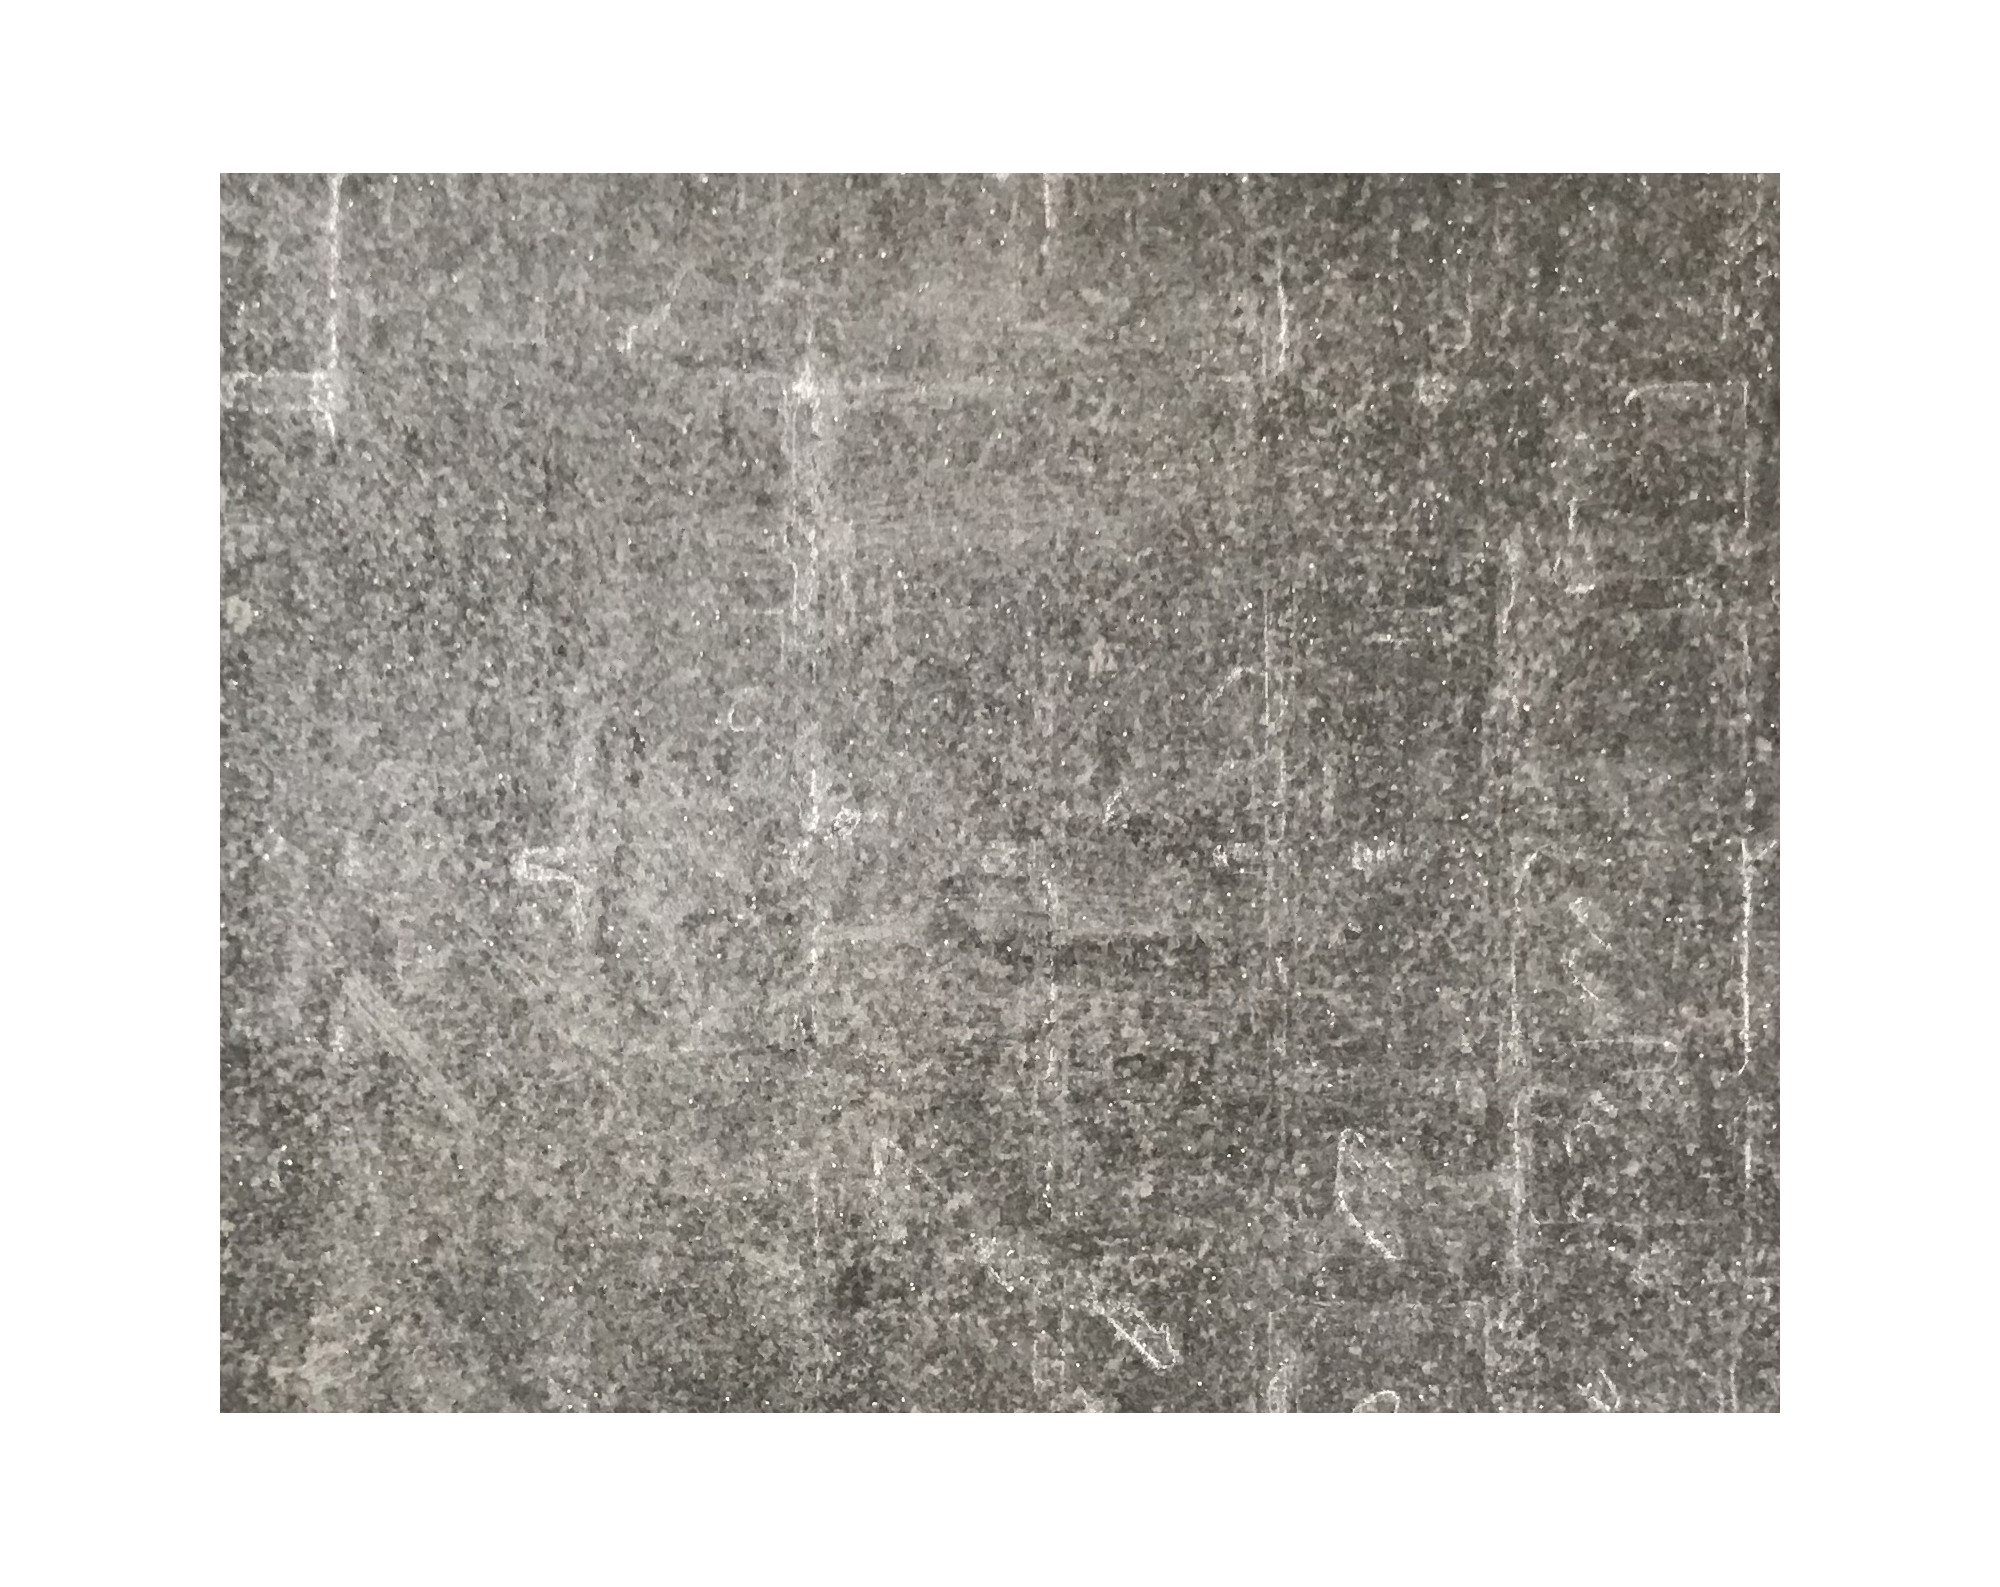 Harmo roc maranelloset, keramiek-serie, rond d:6,00m, zand zwart, keramisch porselein